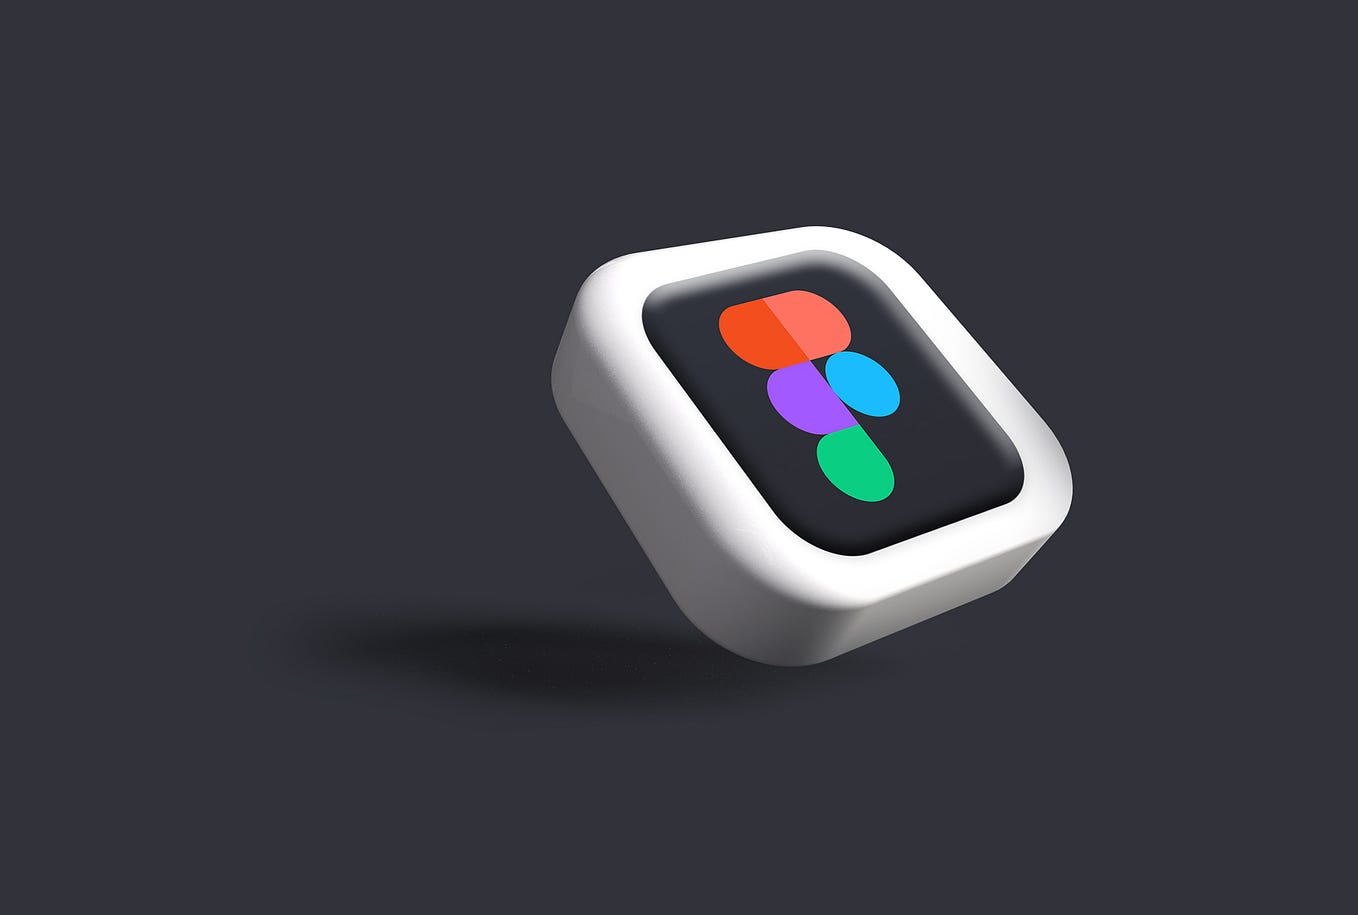 3D logo of the design tool: Figma